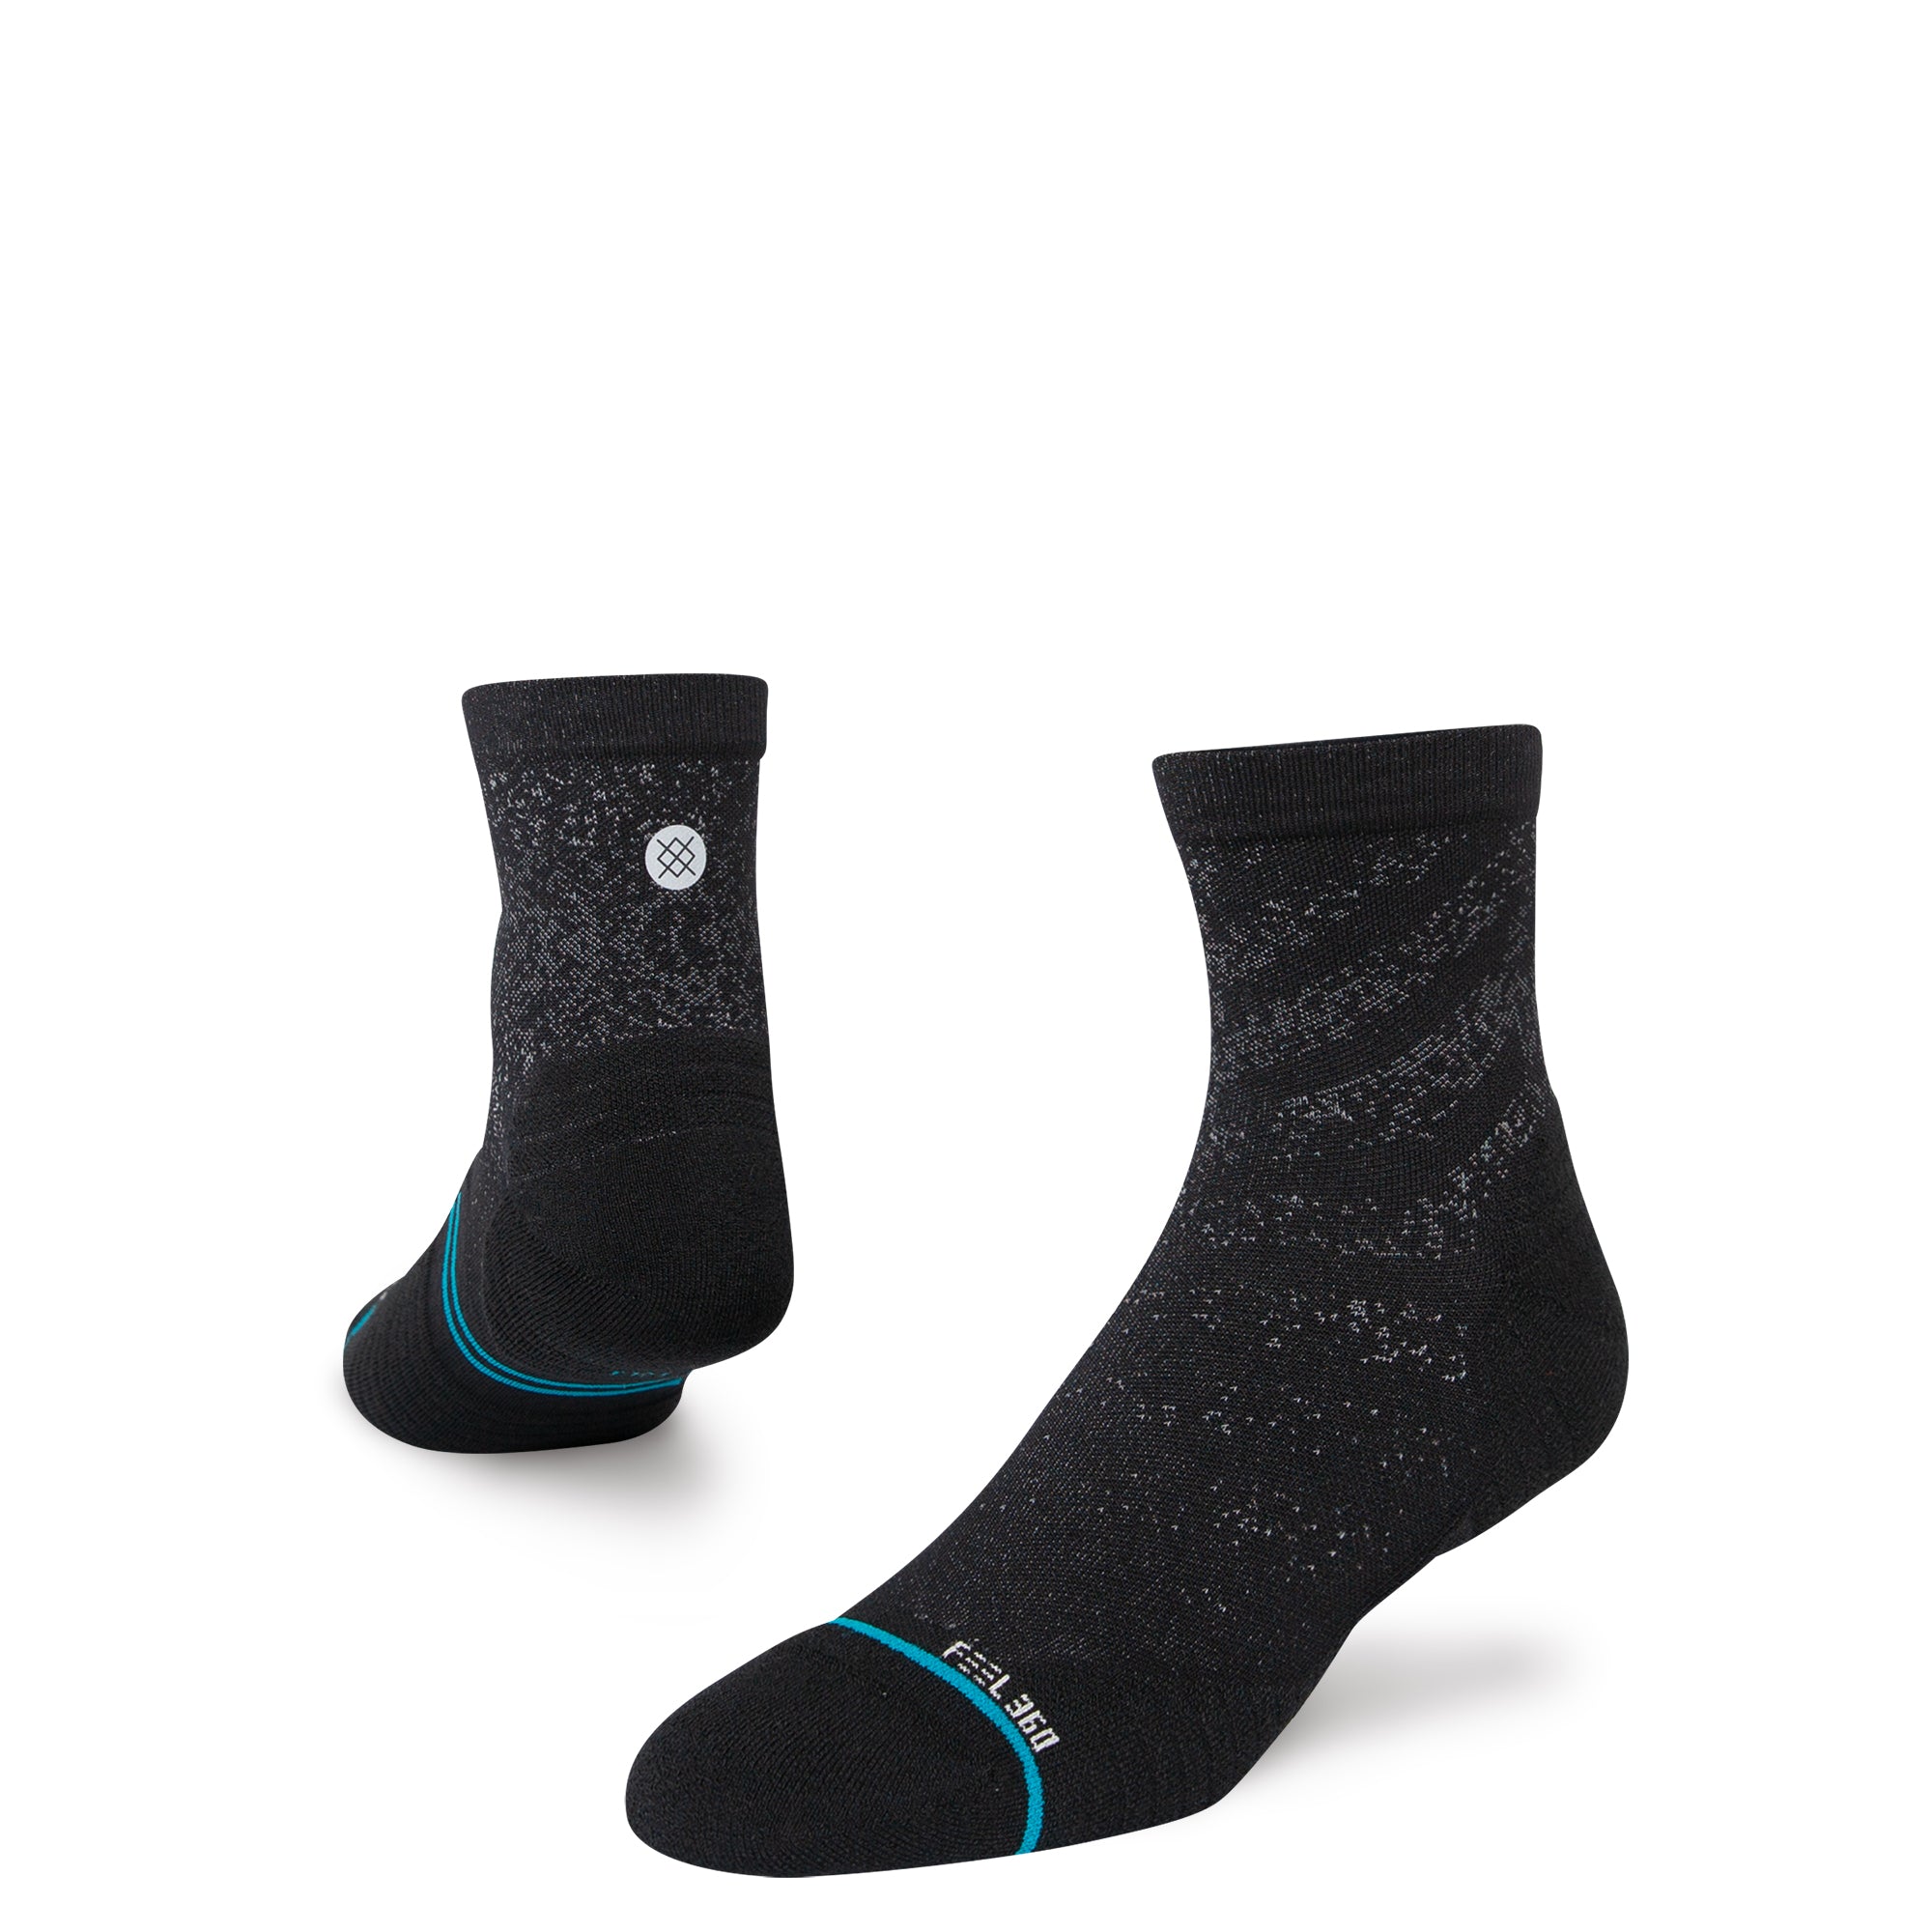 Lite Run™ Quarter Socks Bundle - Bandit Black & White - 4 Pack